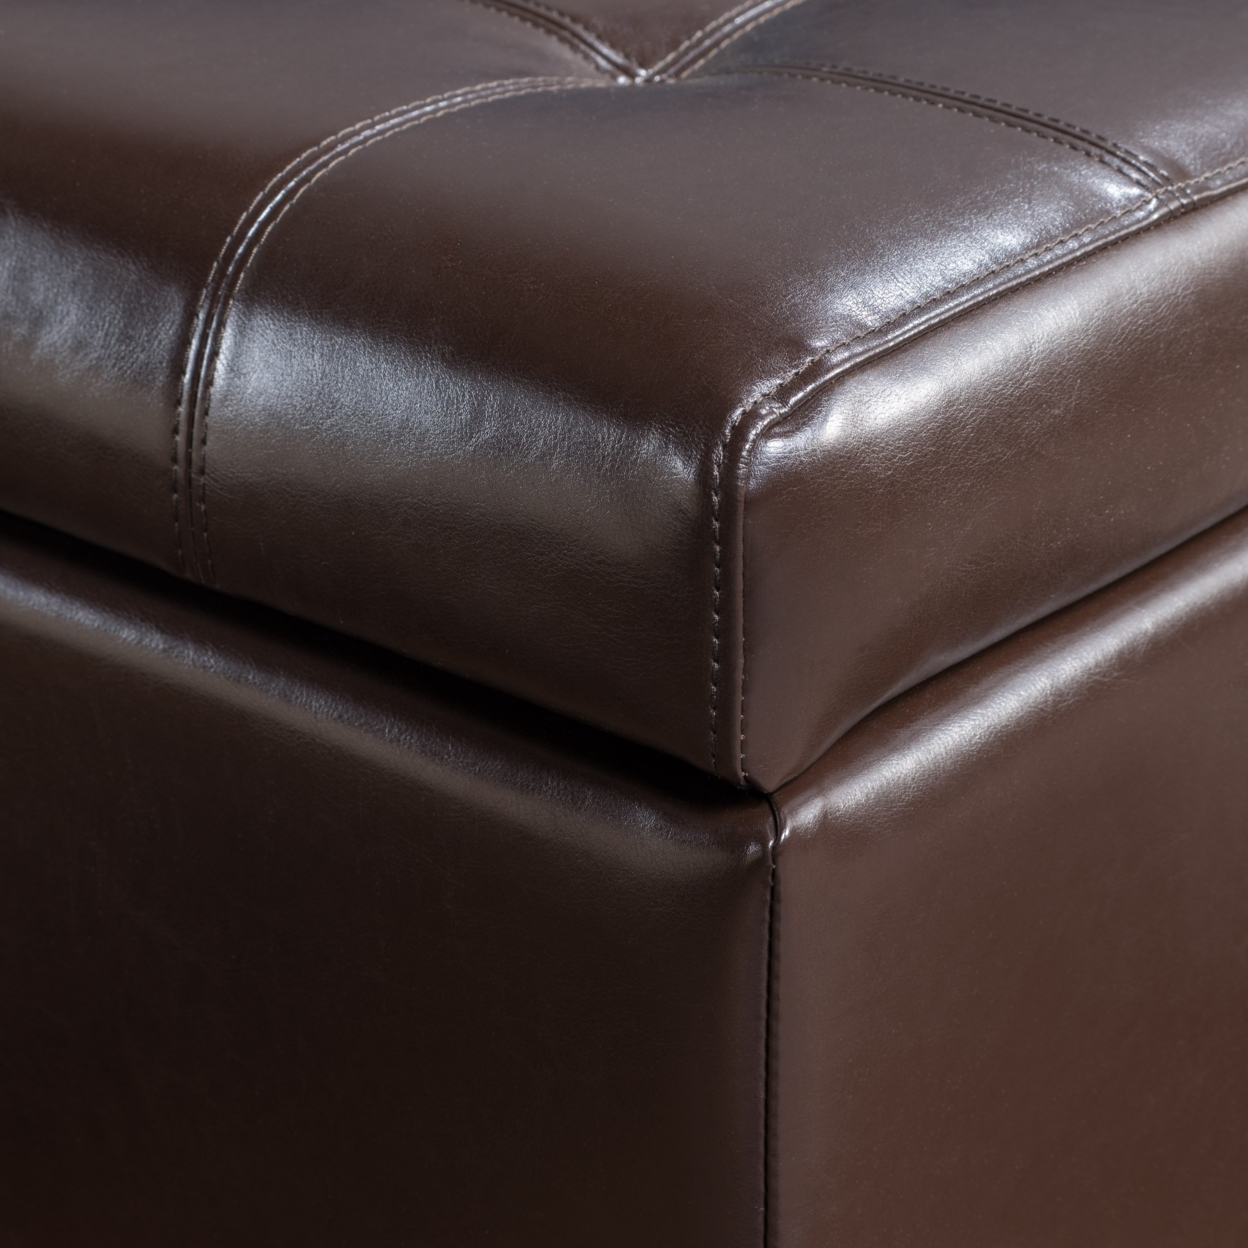 Santa Rosa Brown Tufted Leather Storage Ottoman Bench